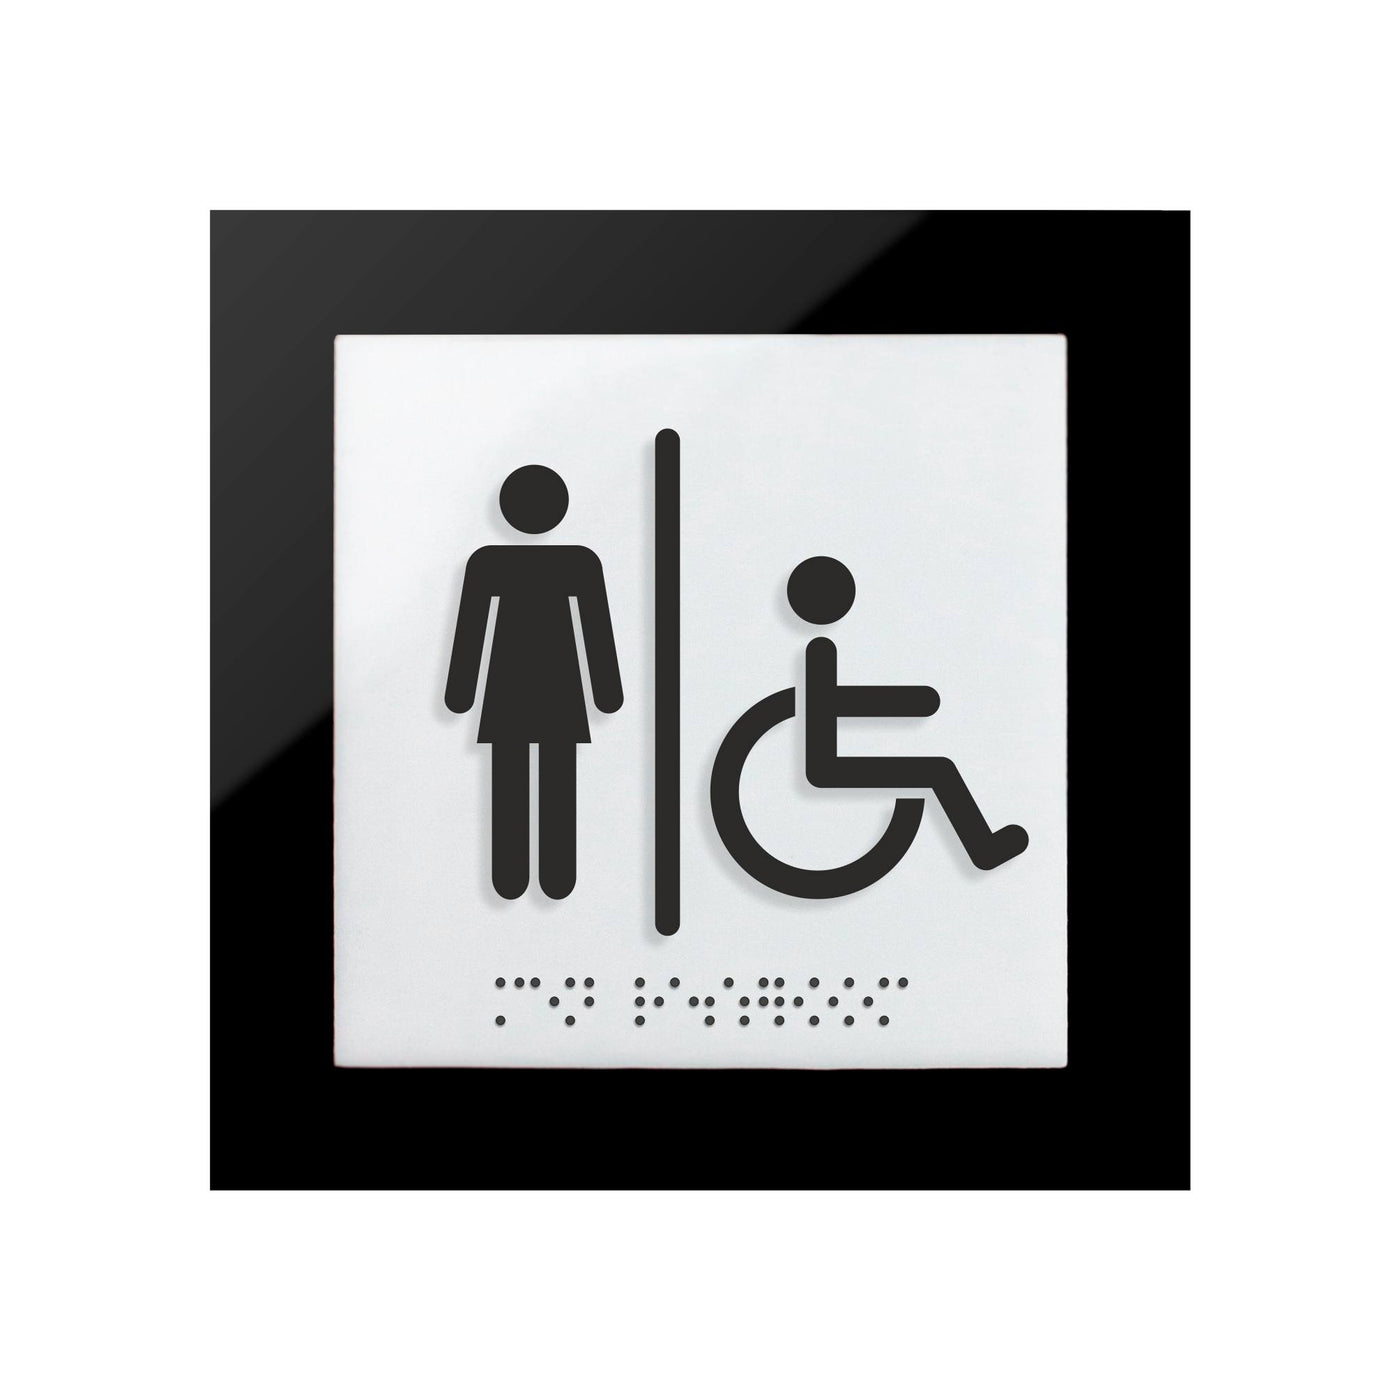 Acrylic Woman & Wheelchair Restroom Sign - "Simple" Design